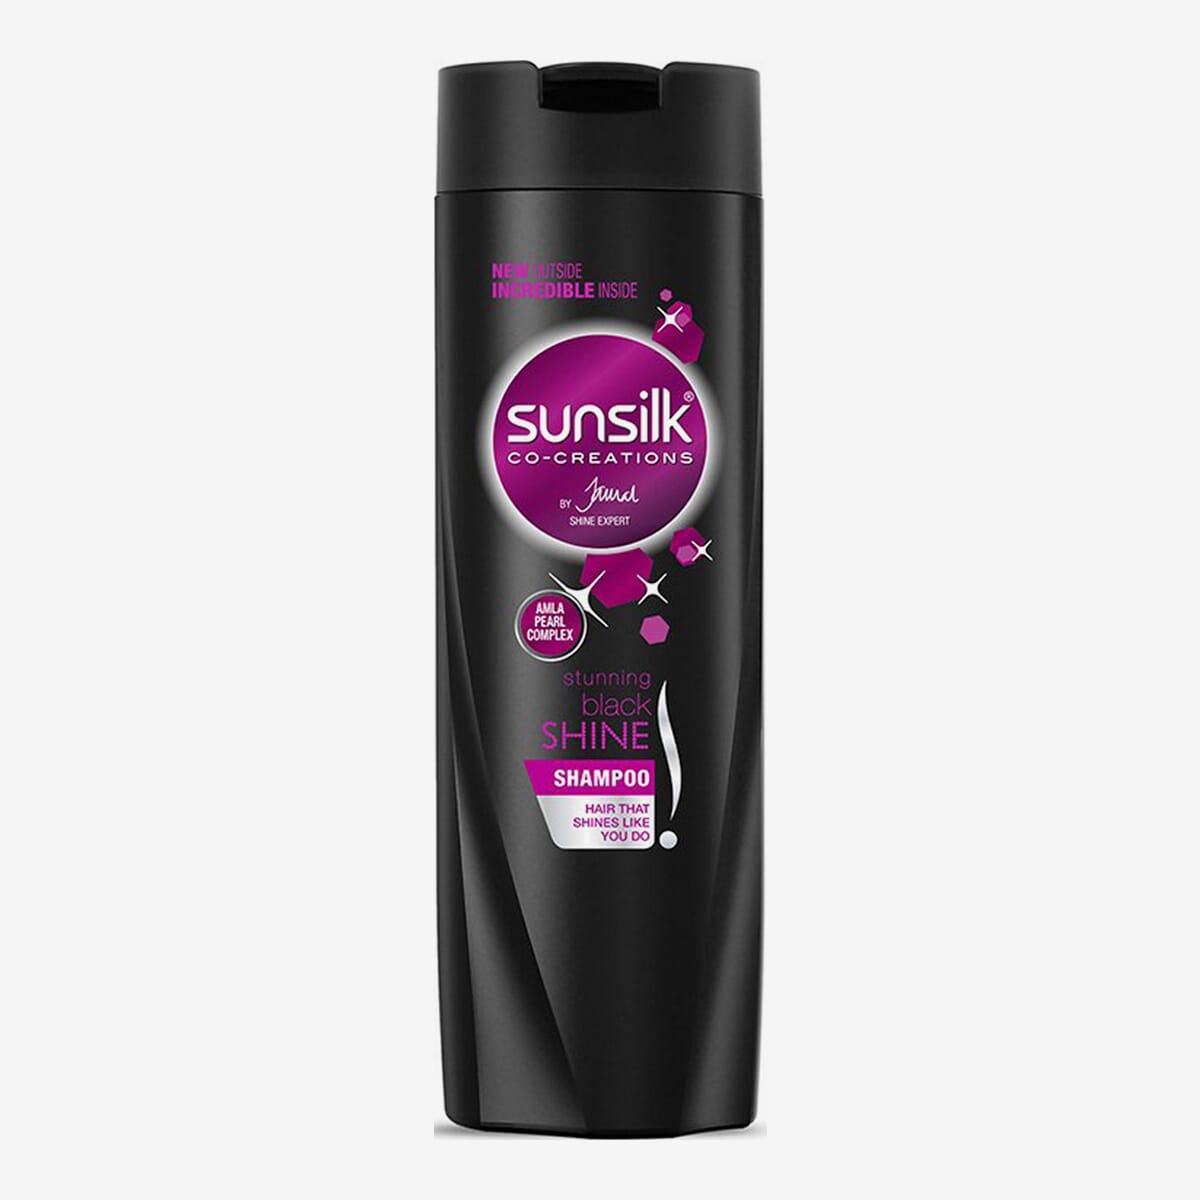 Sunsilk Stunning Black Shine 355ml